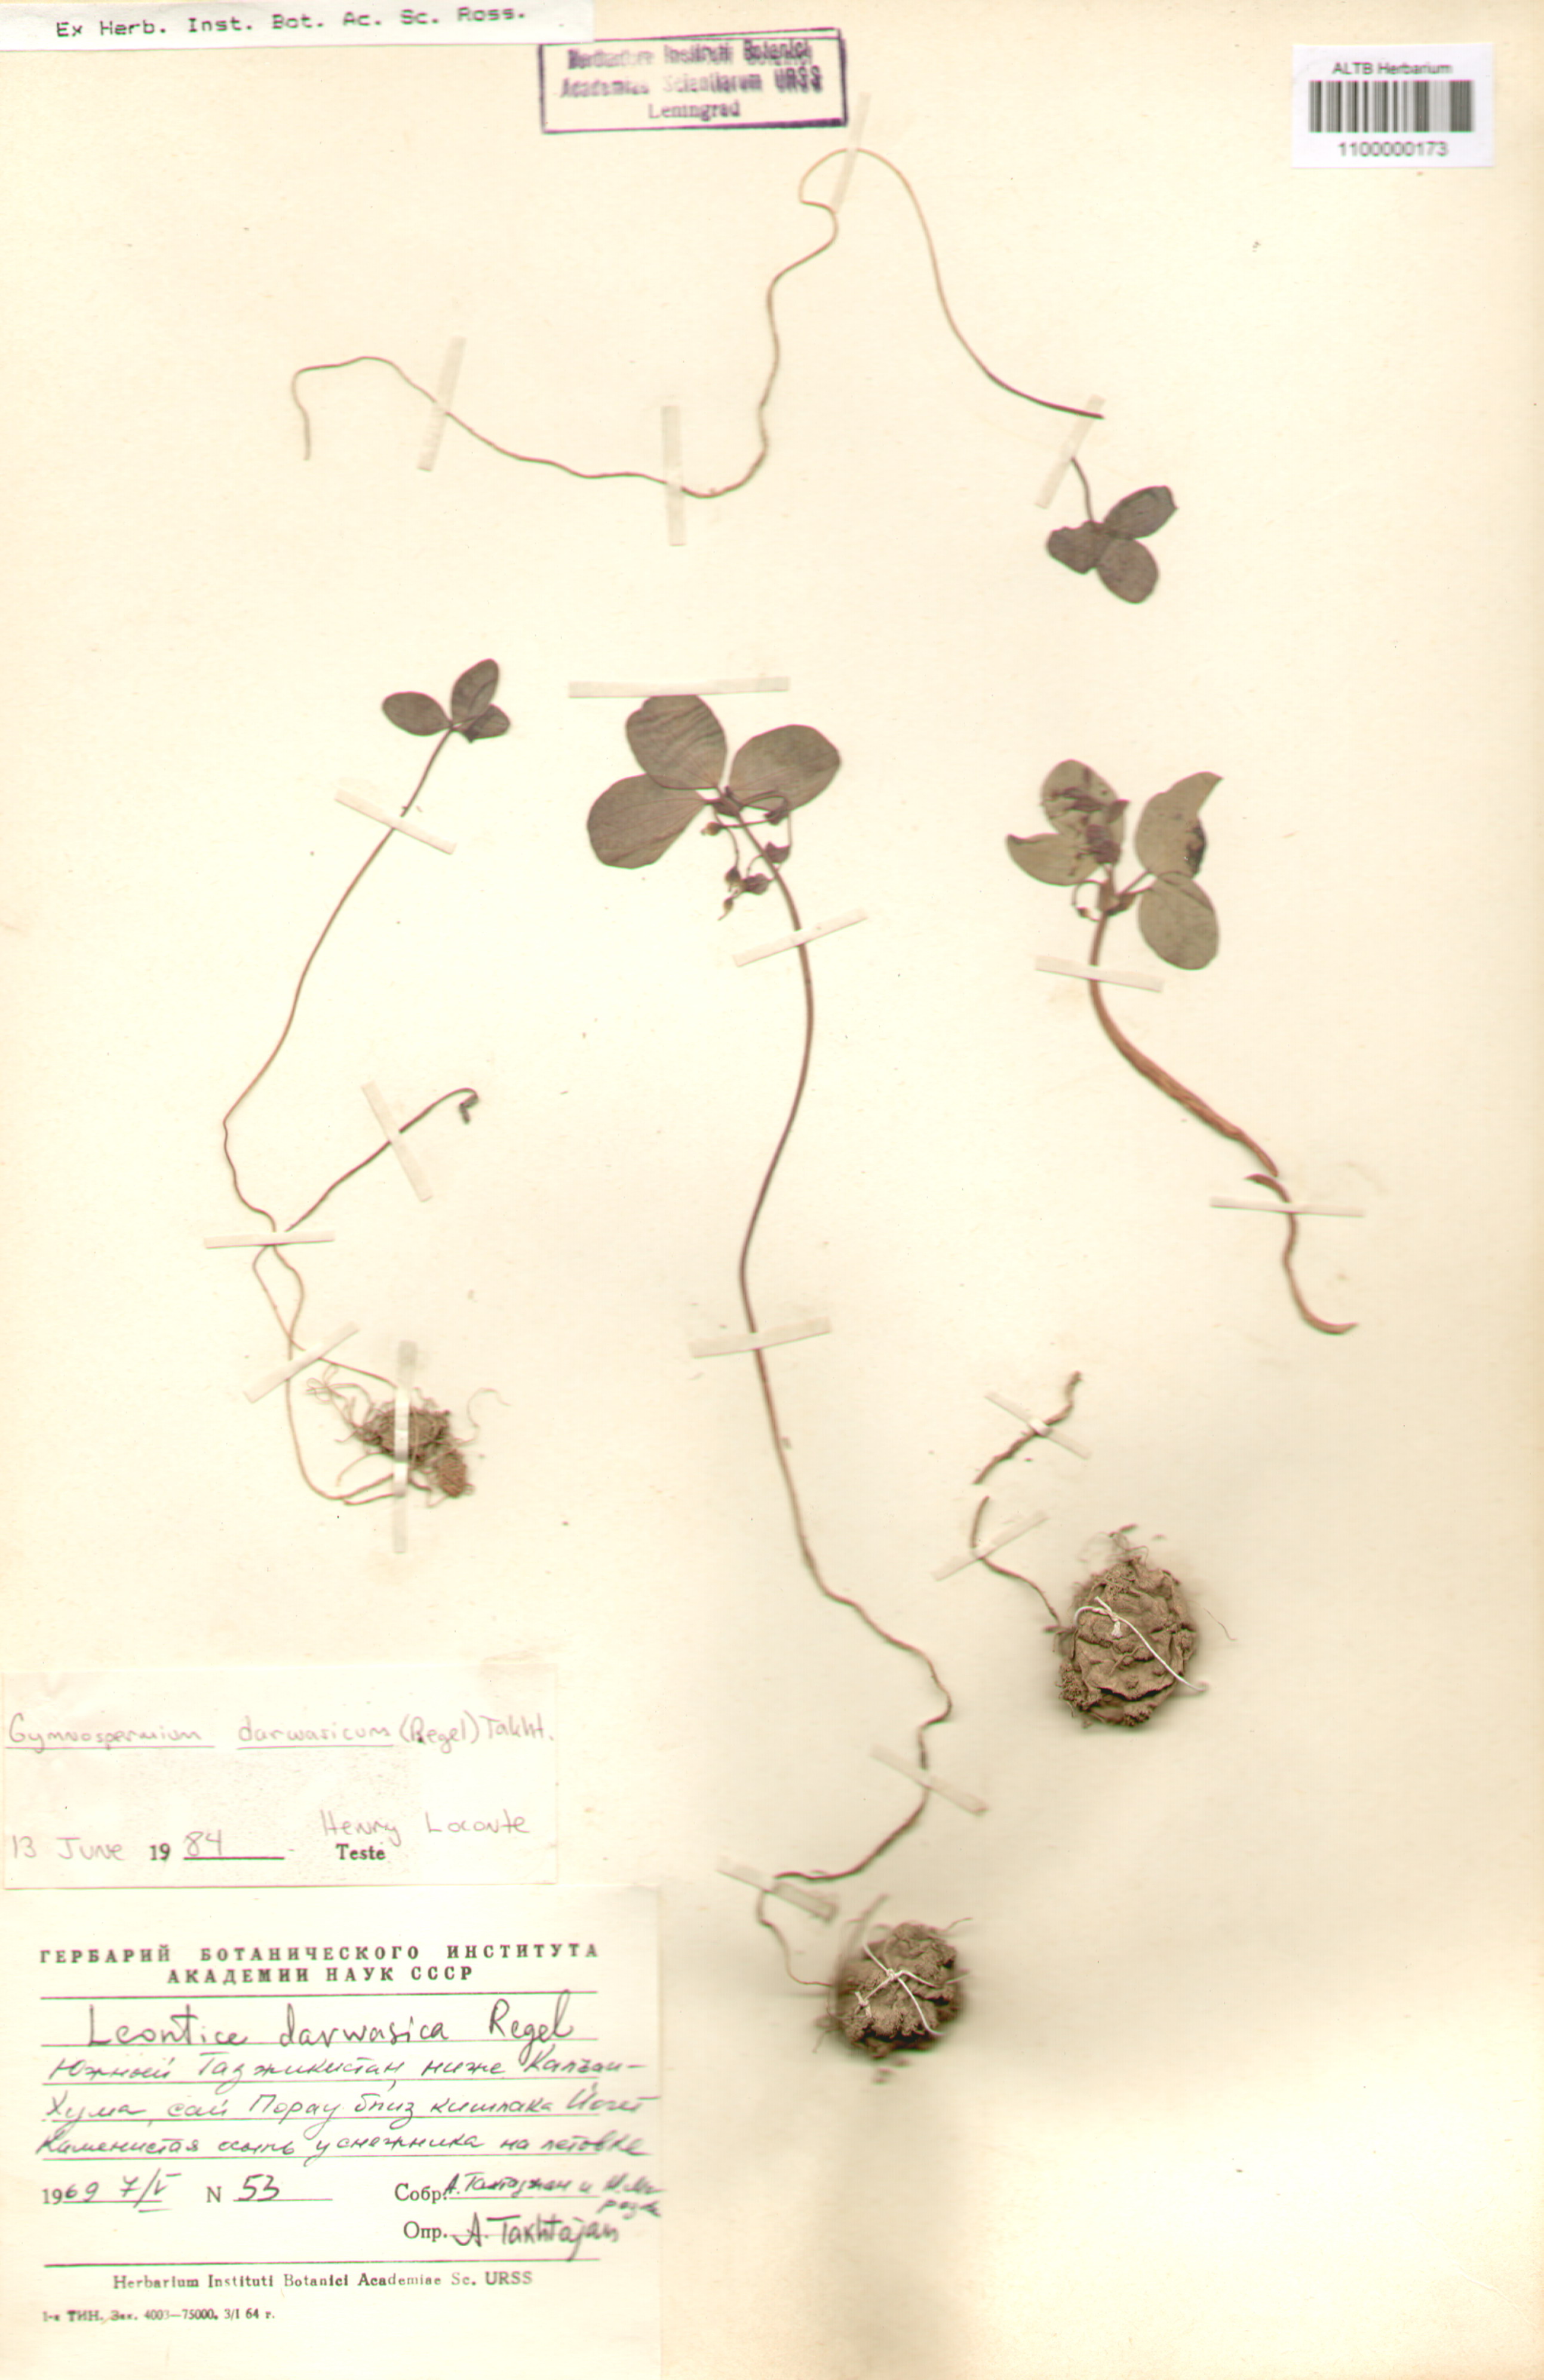 Berberidaceae,Gymnospermium darwasicum (Rgl.) Takht.